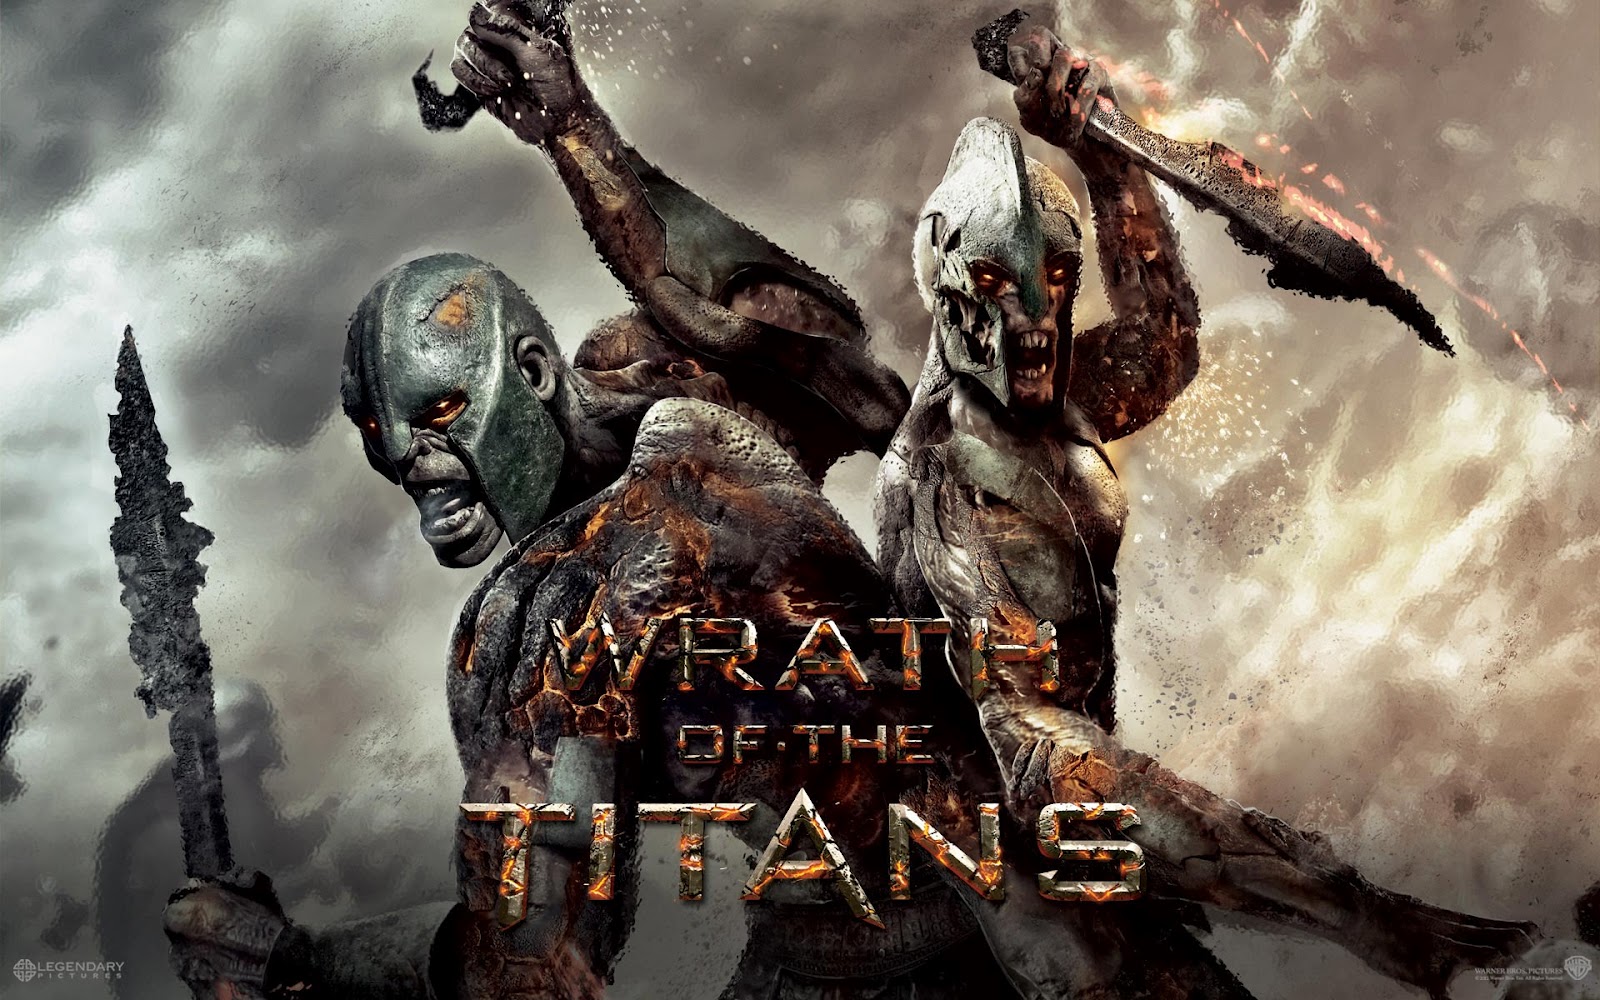 Wrath of the Titans' better than predecessor 'Clash